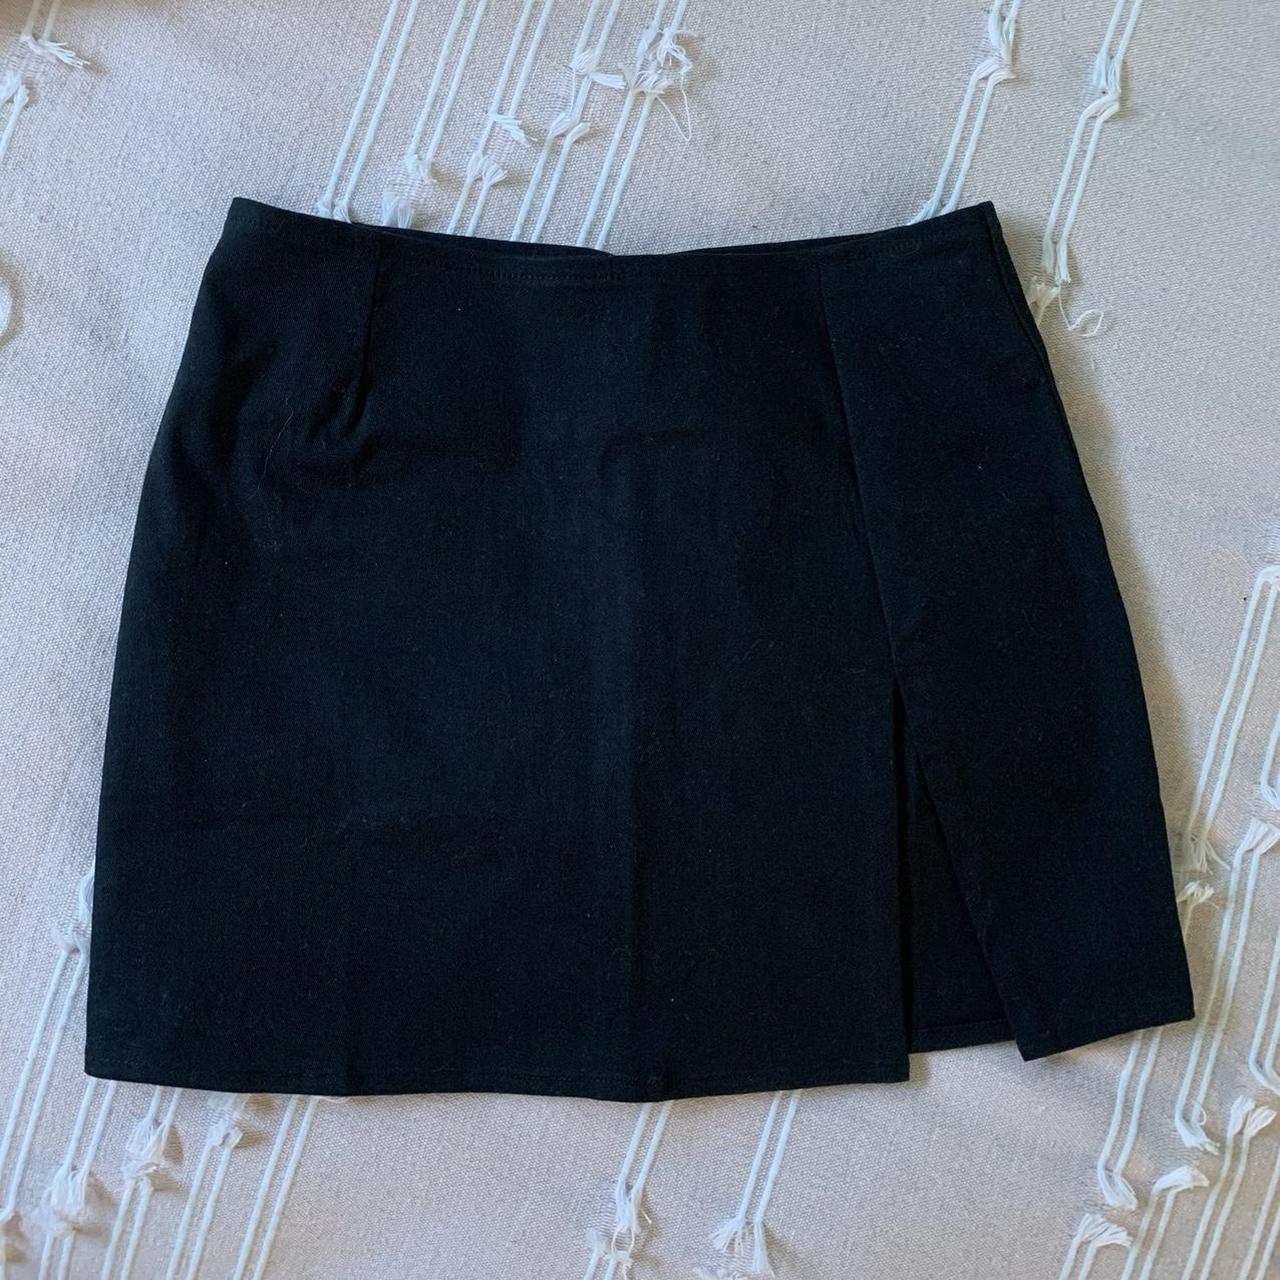 Motel black skirt with split in XXS (Never worn) - Depop